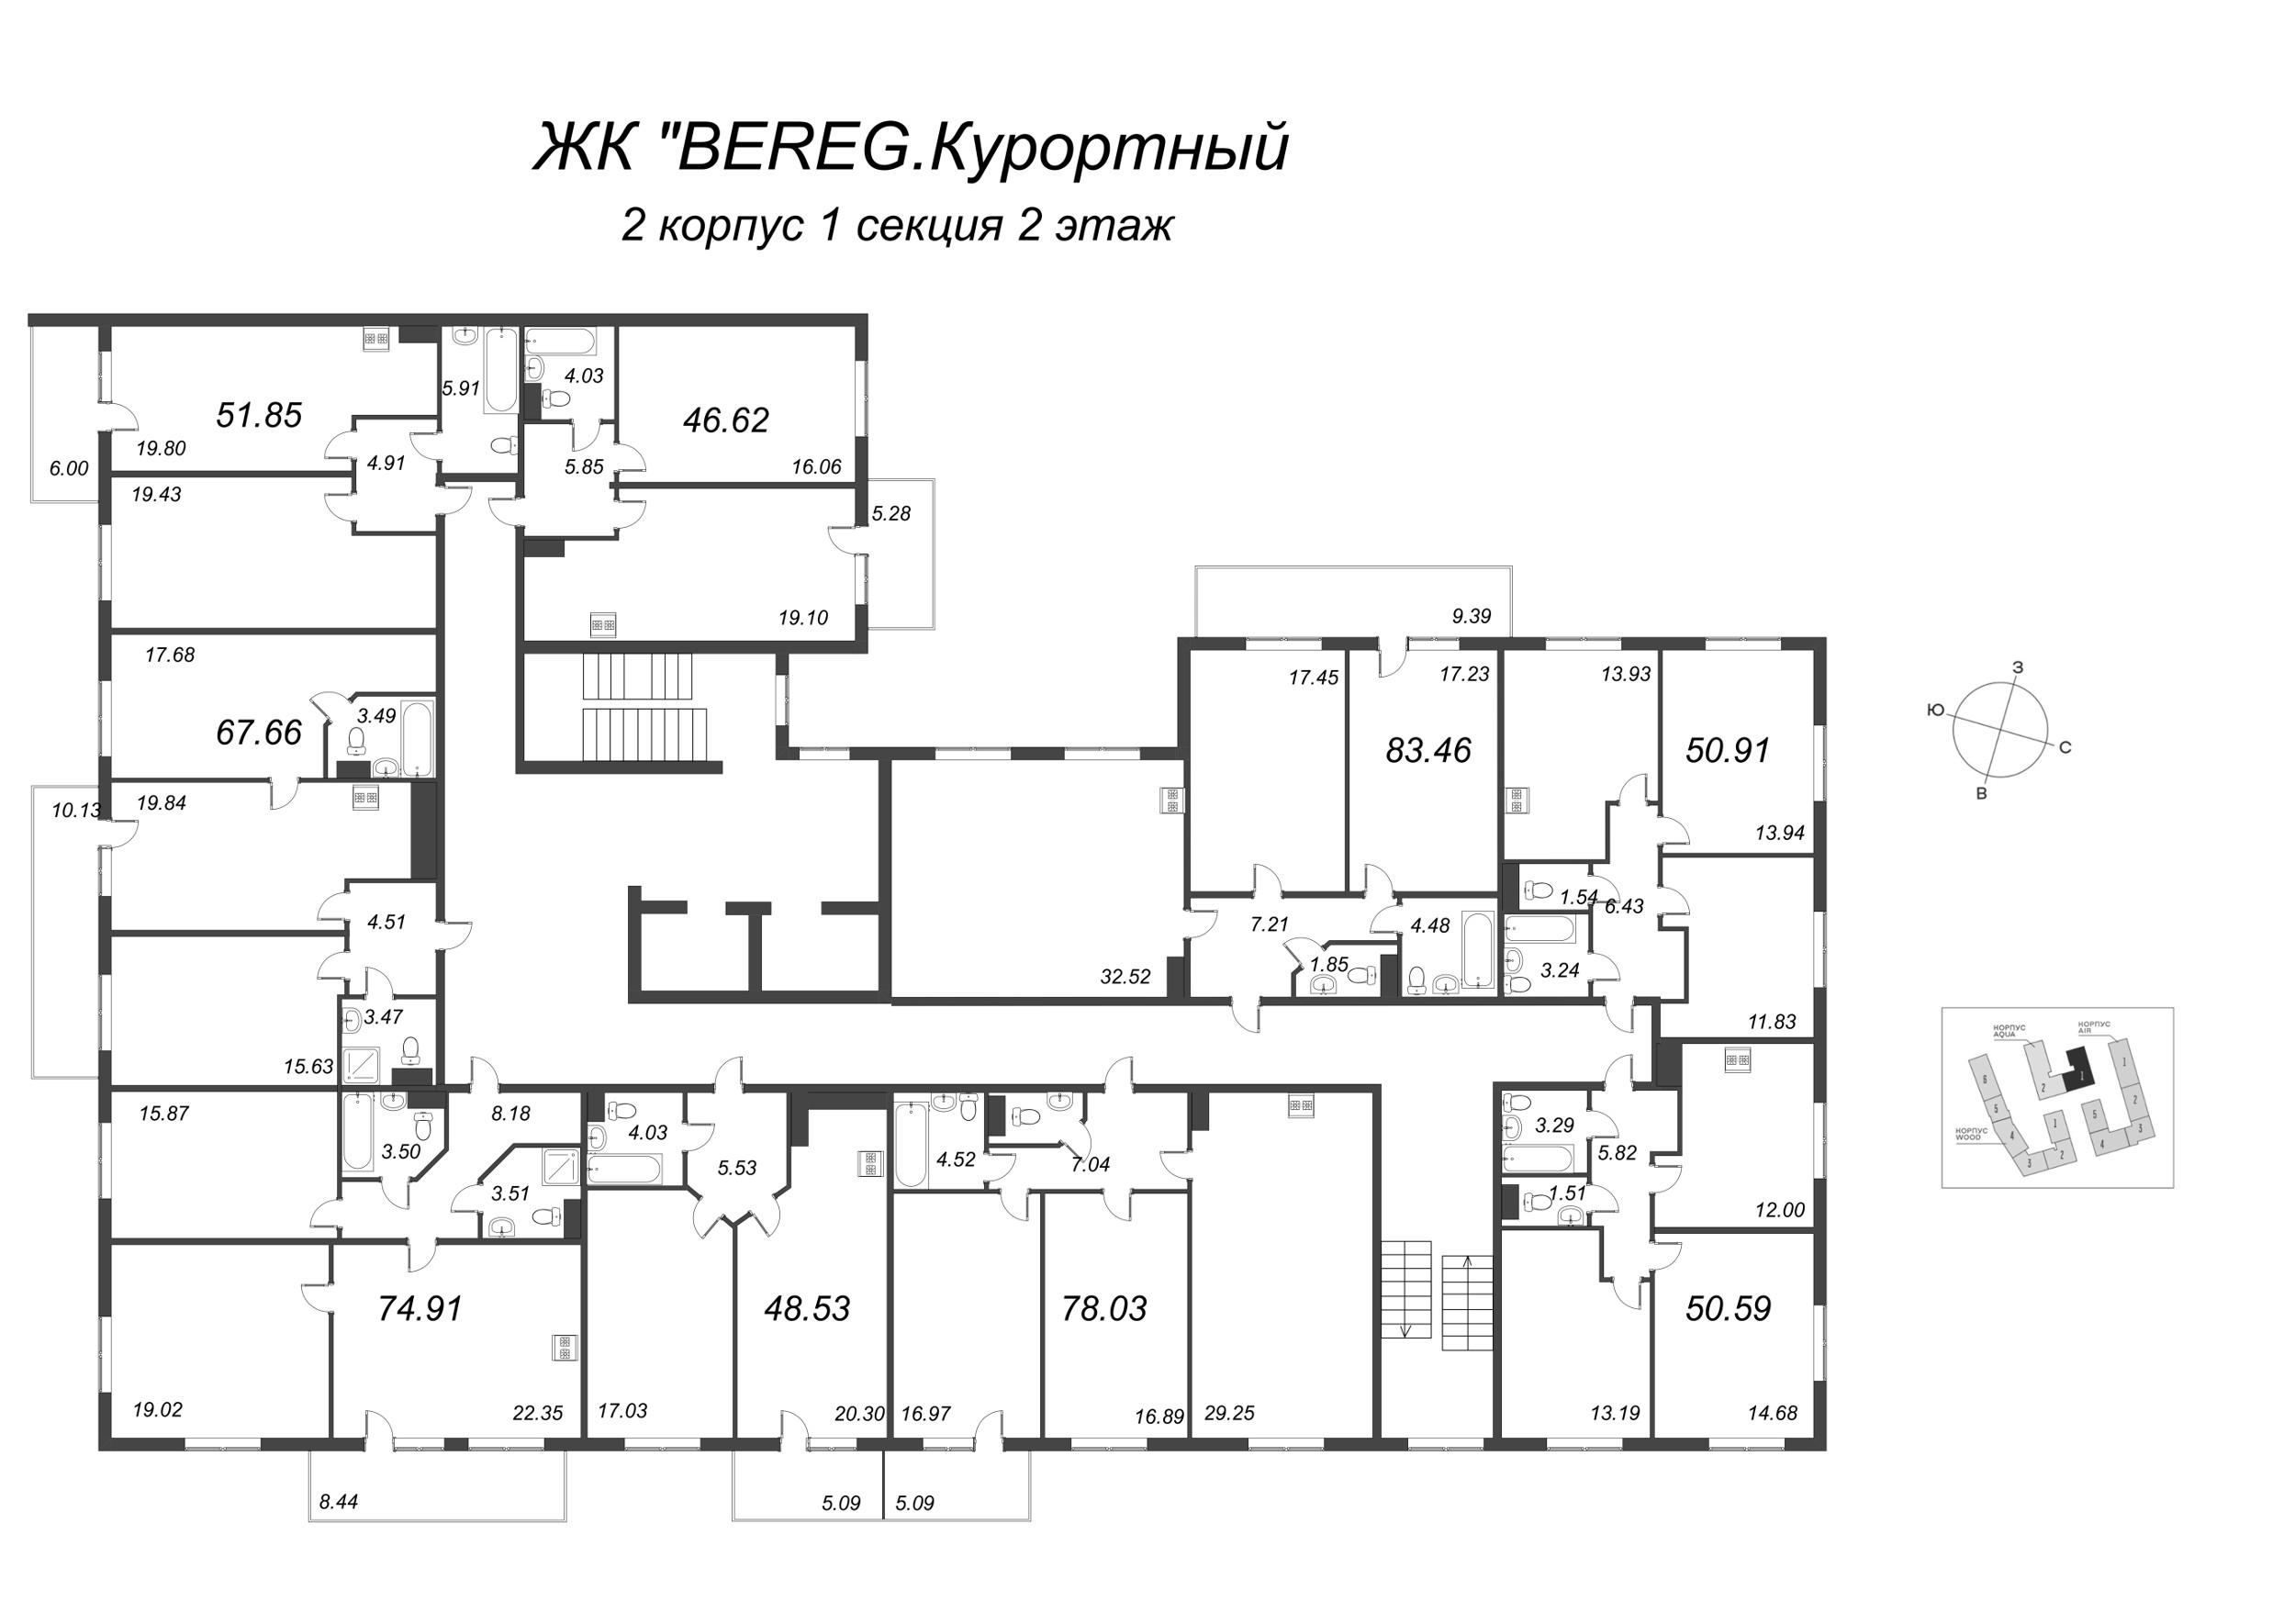 3-комнатная (Евро) квартира, 67.66 м² - планировка этажа